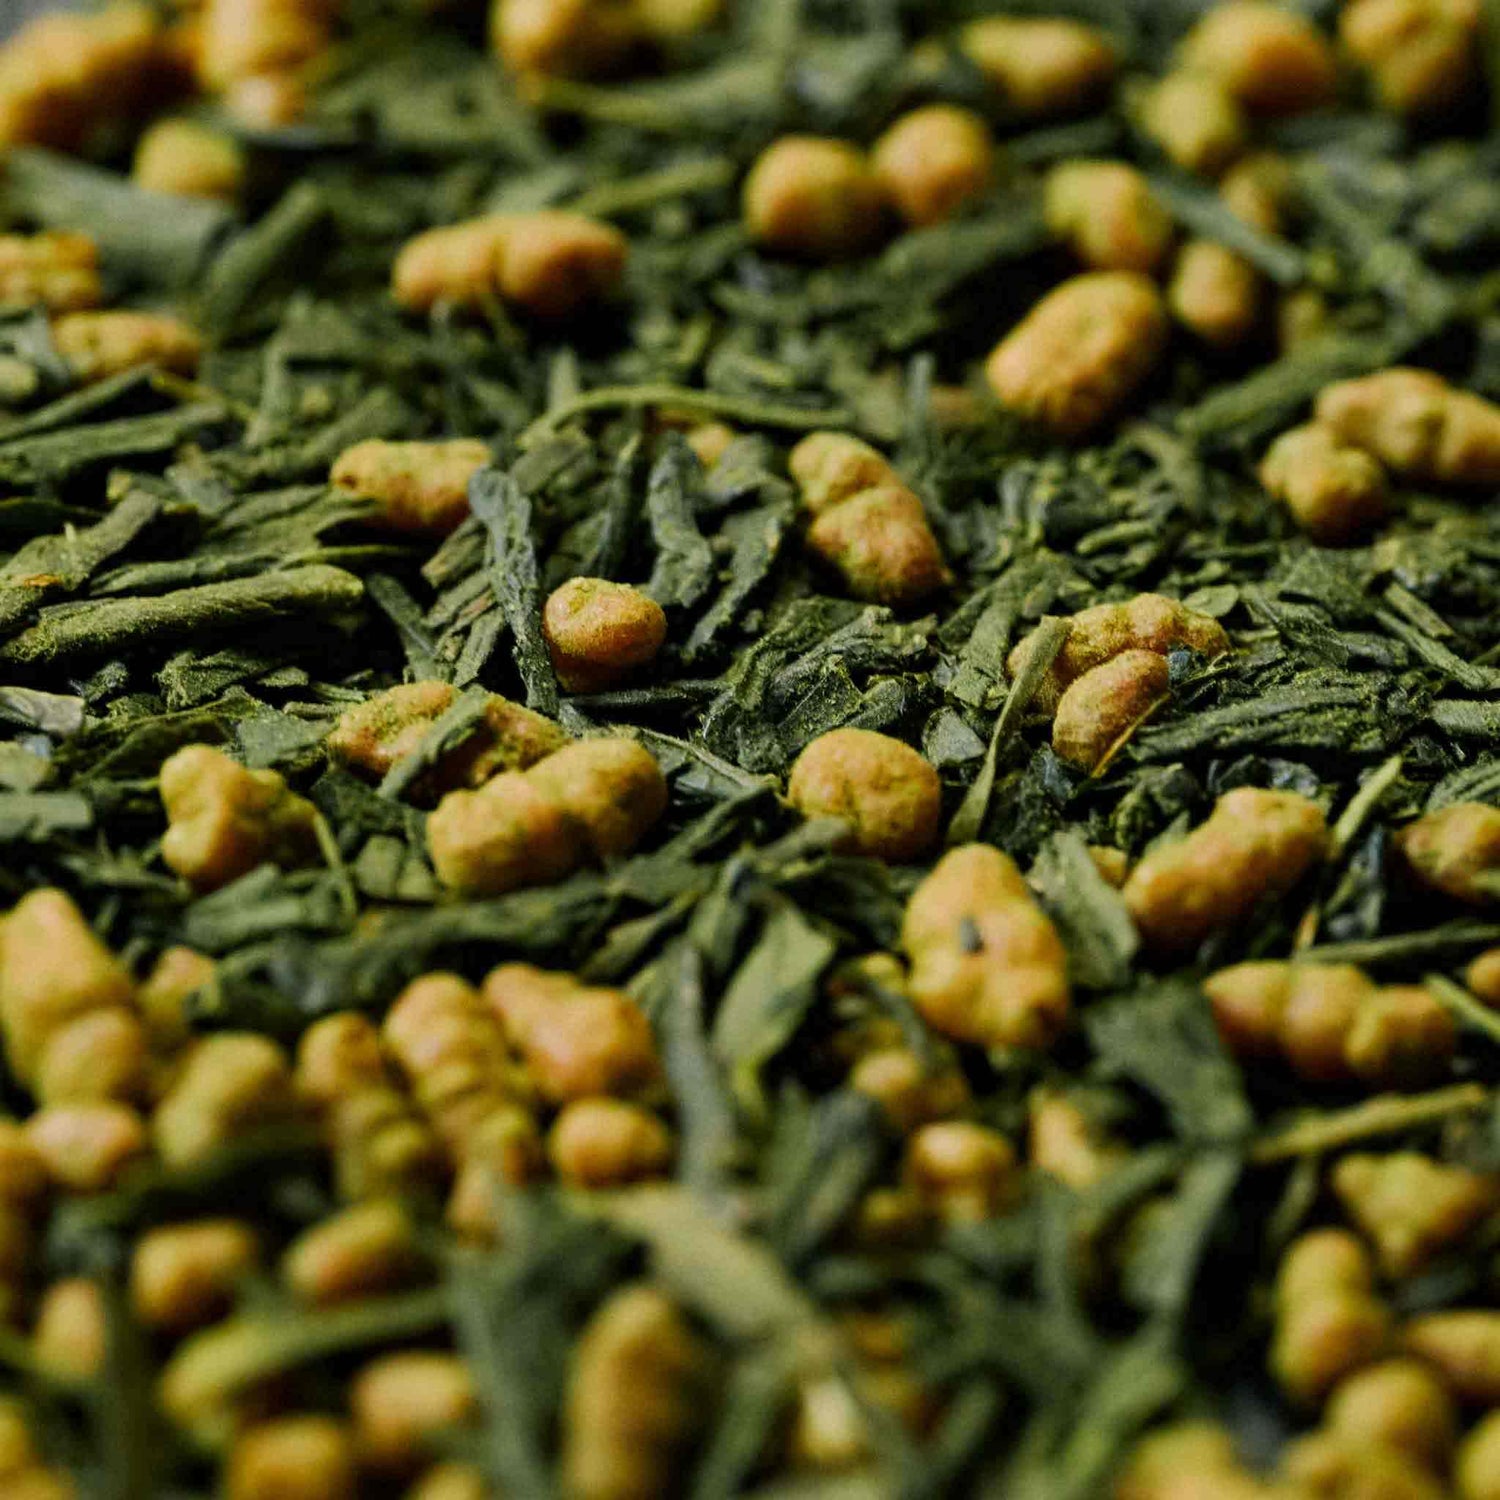 genmaicha green tea